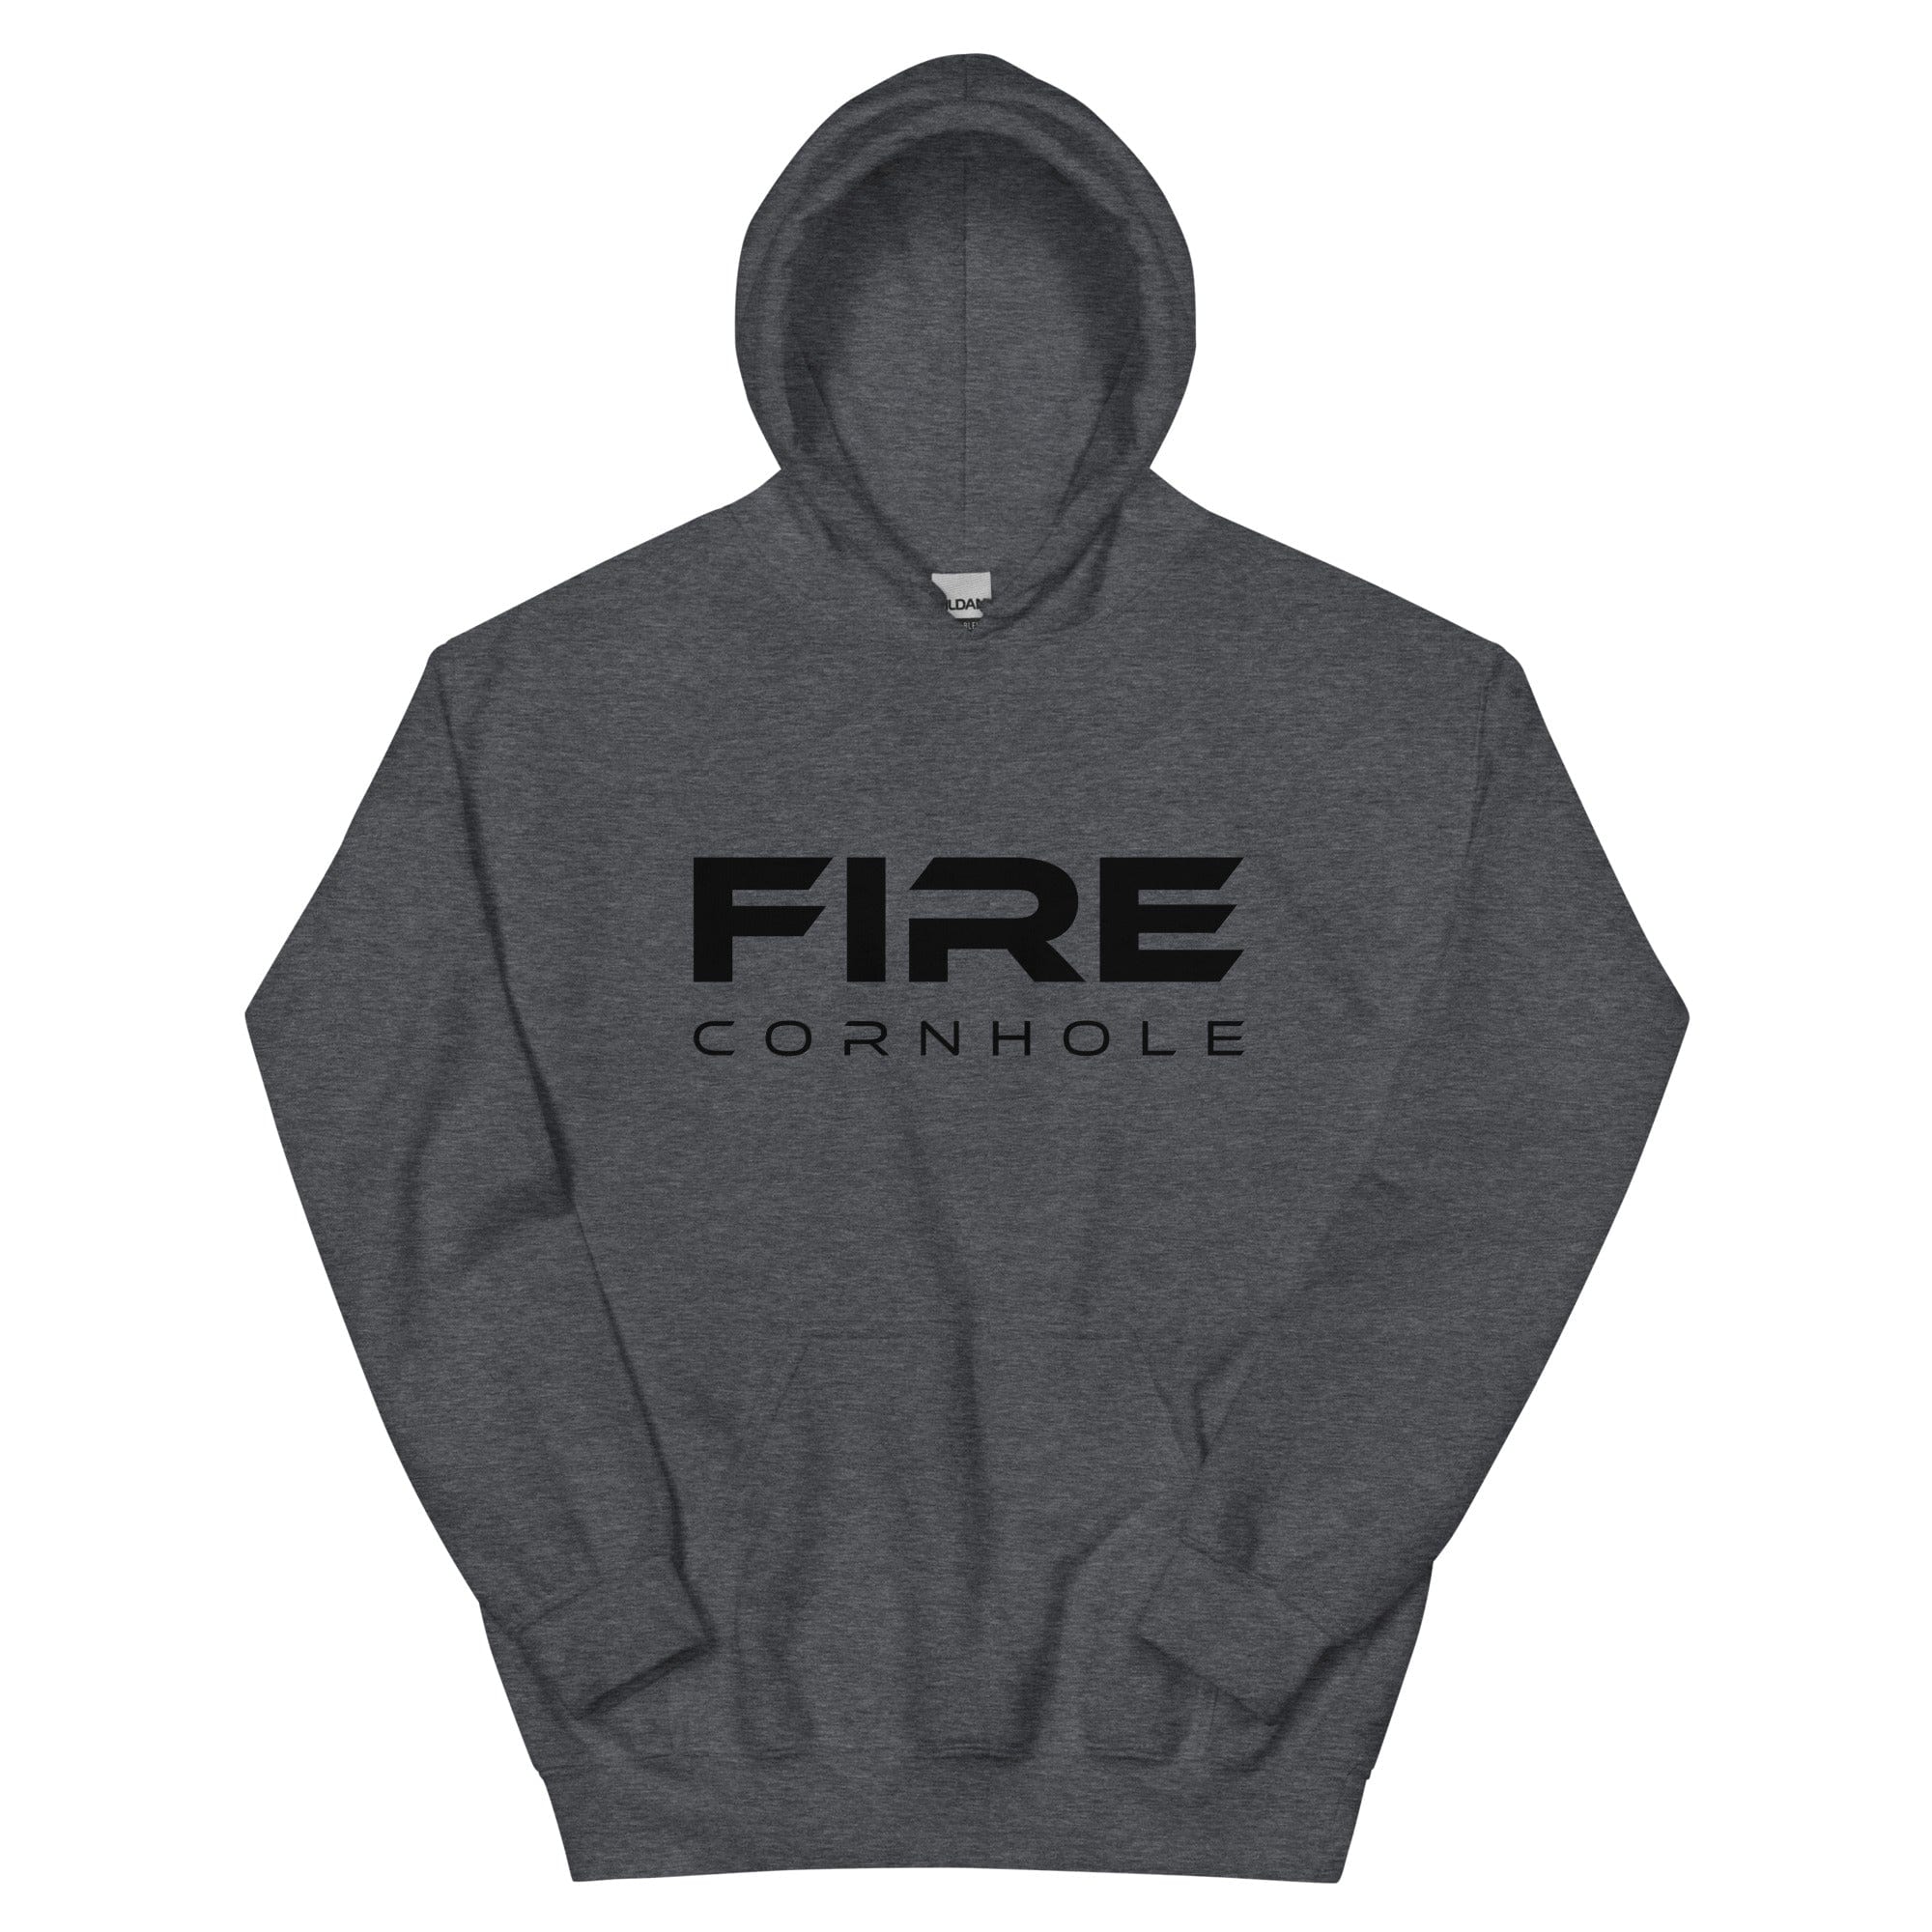 Dark grey unisex cotton hoodie with Fire Cornhole logo in black